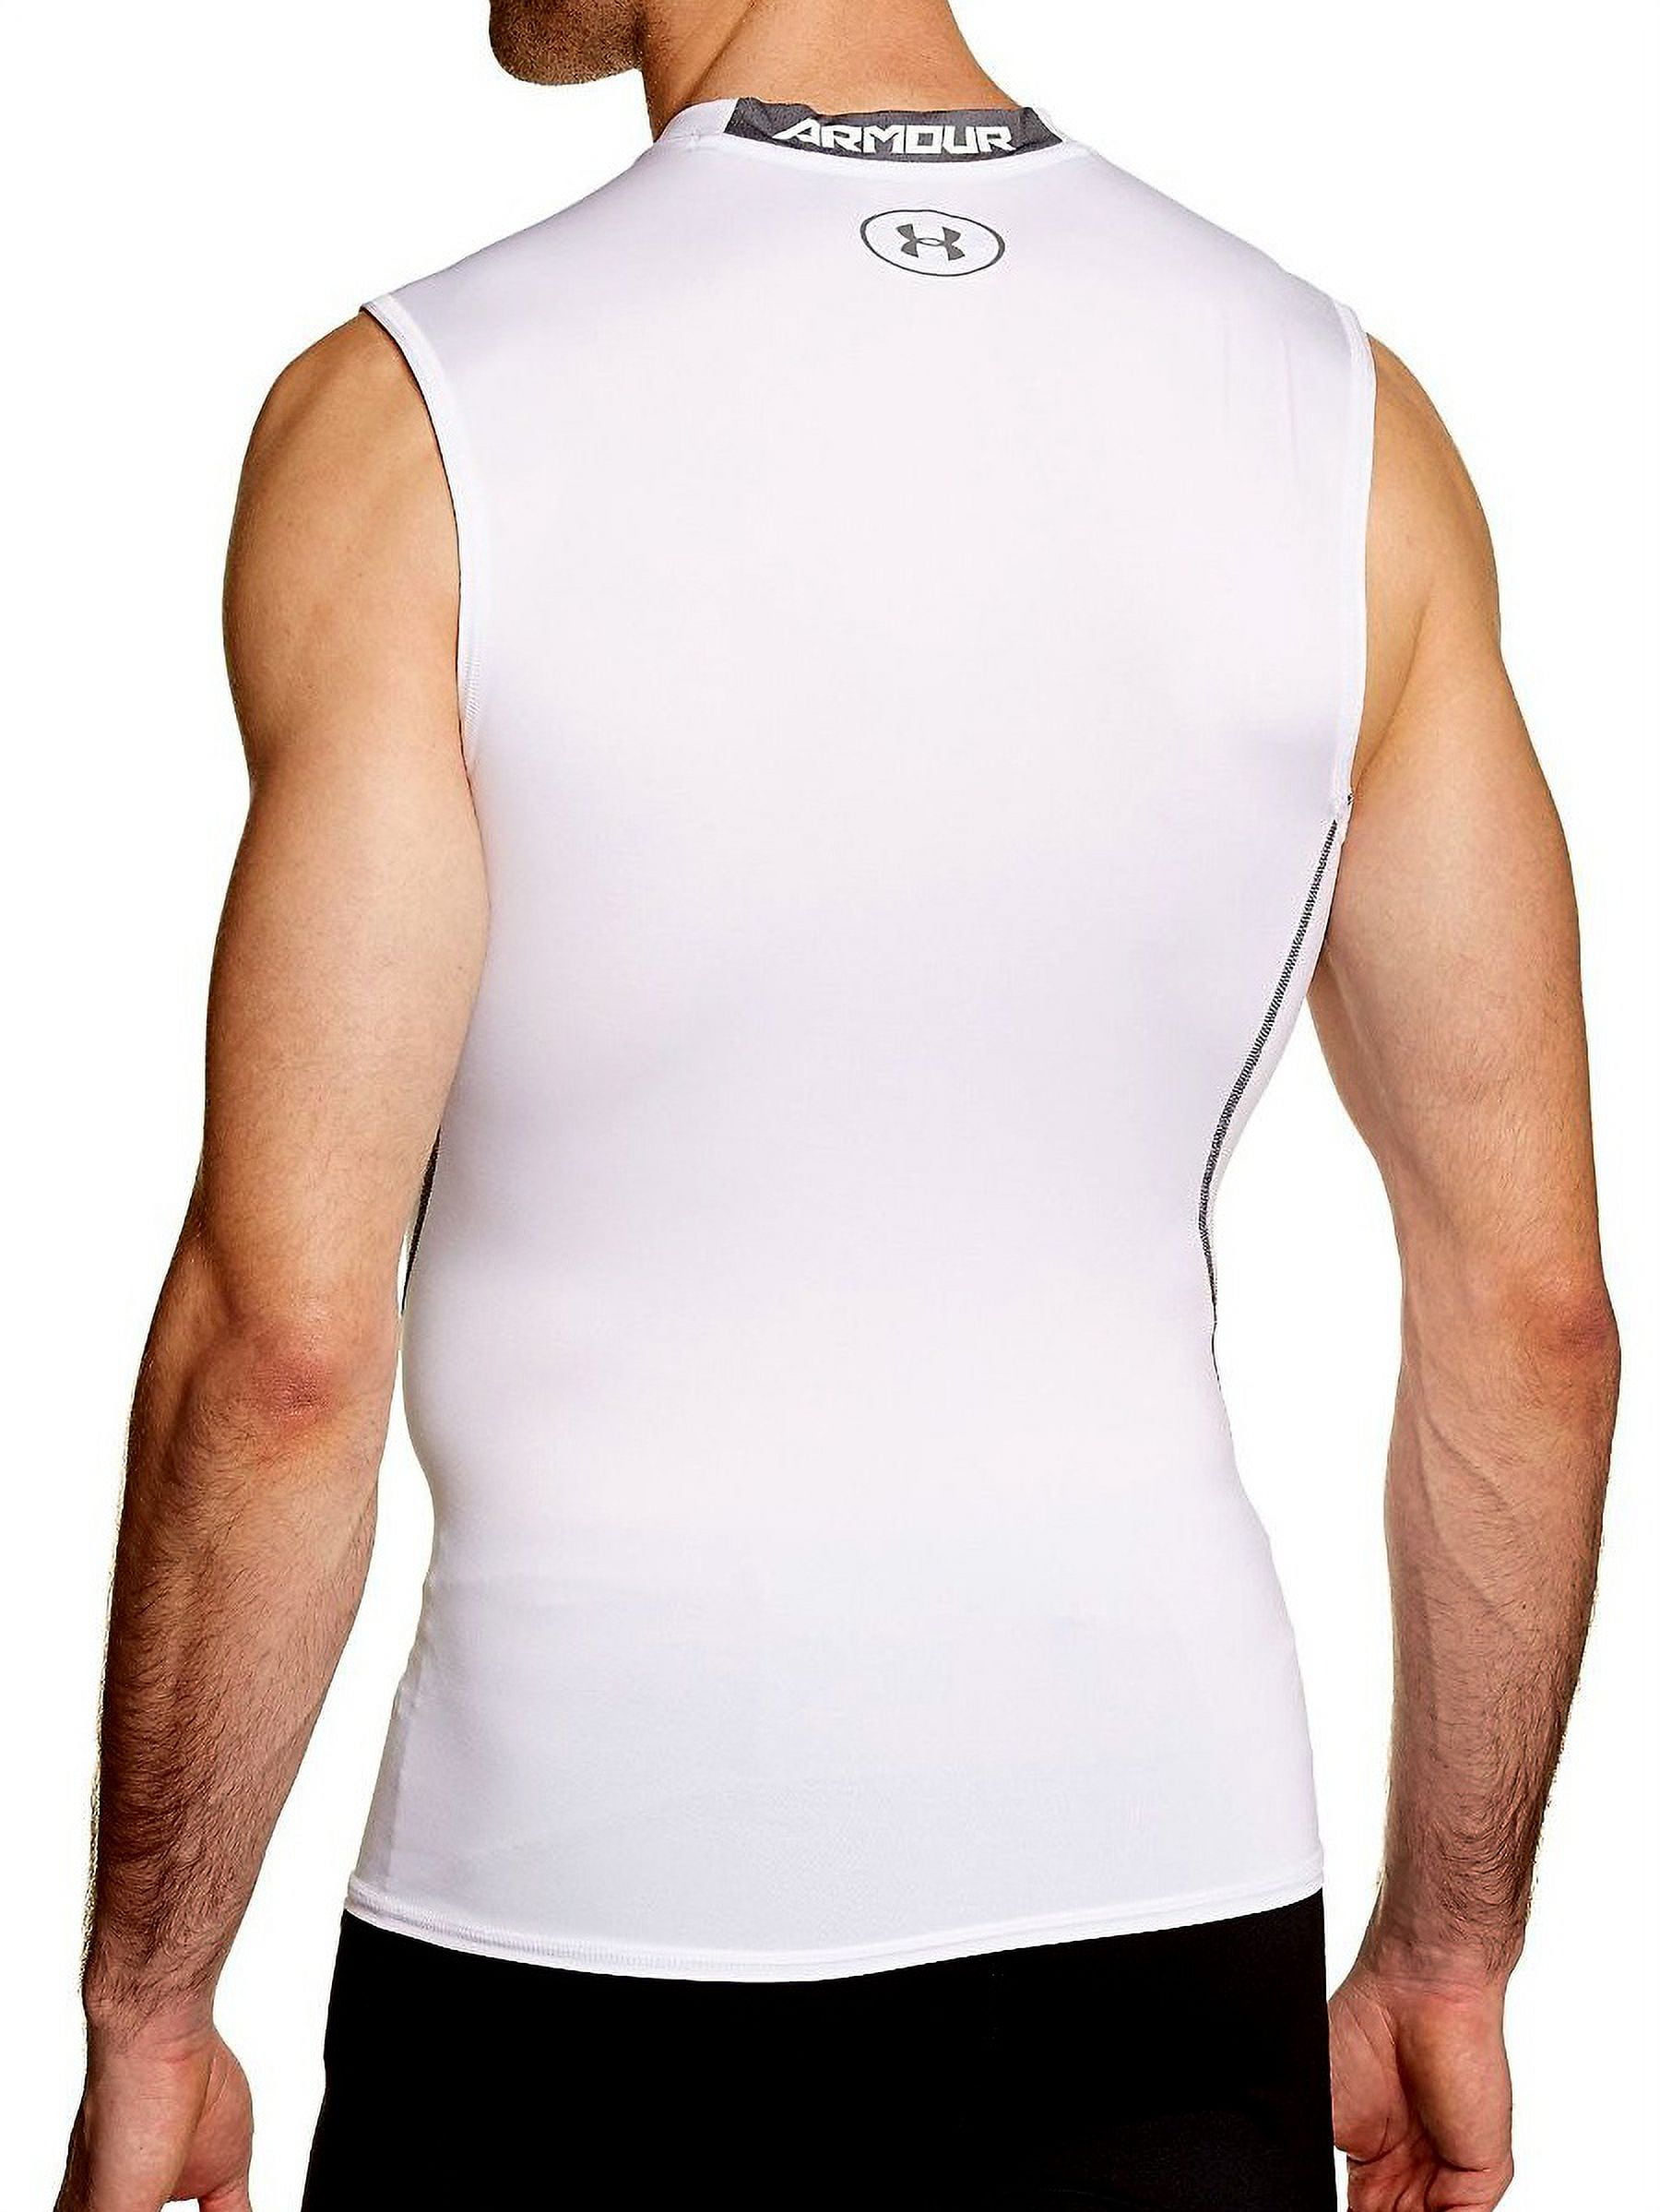 Under Armour Men's HeatGear Armour Sleeveless Compression Shirt